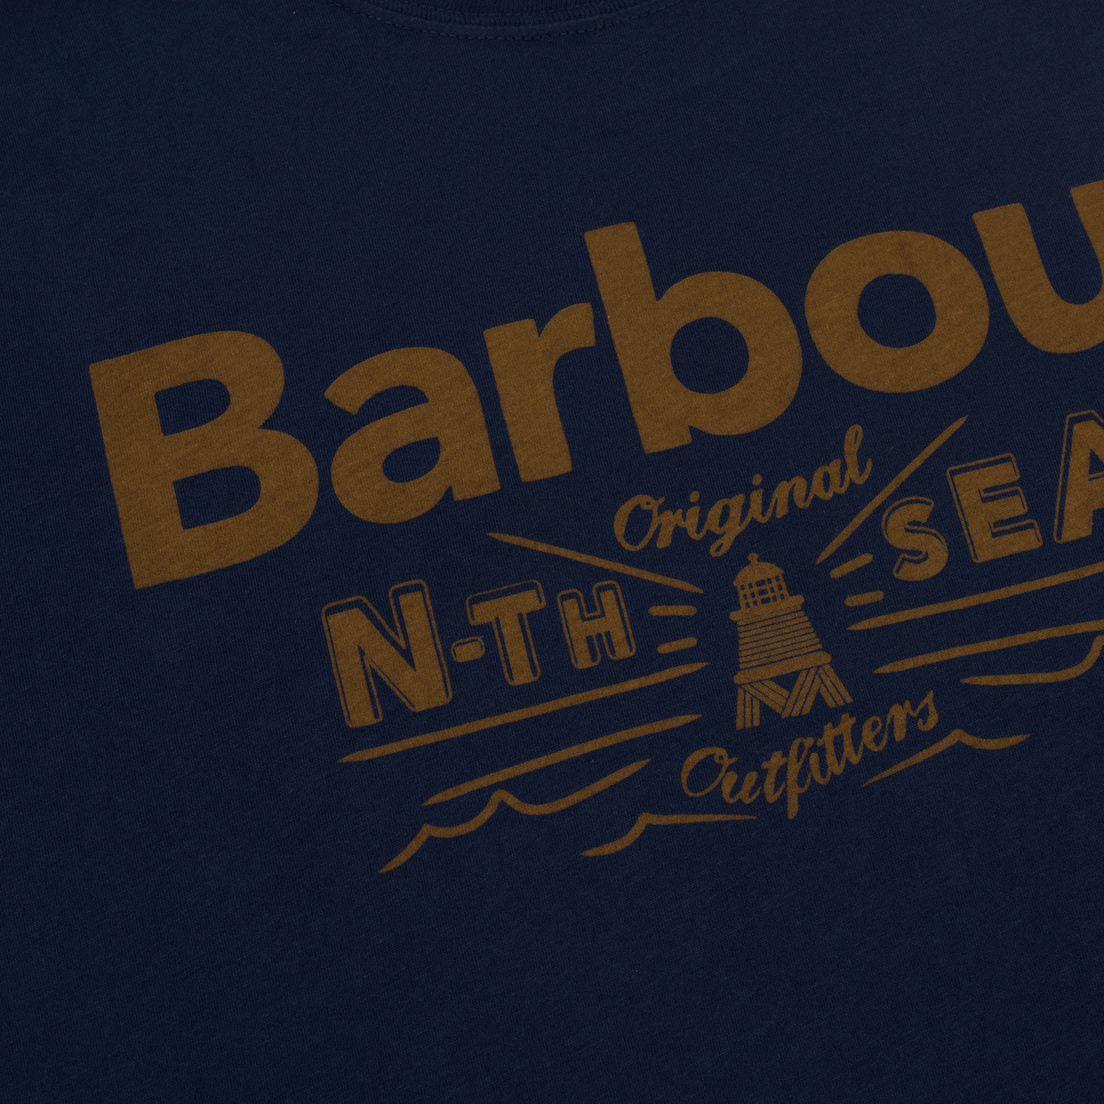 Barbour Мужская футболка Cove